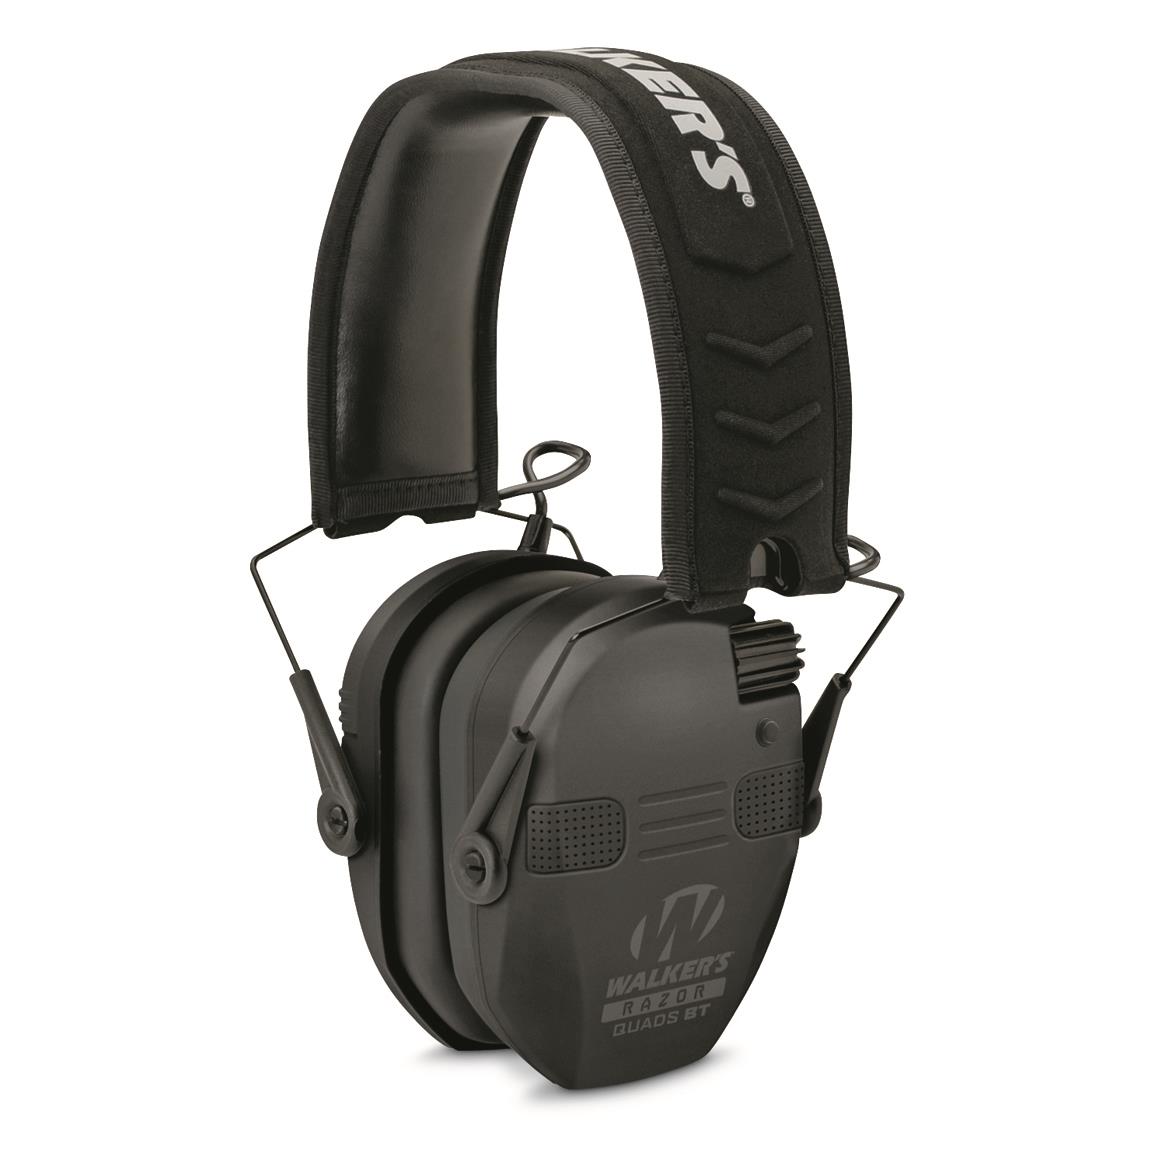 Walker's Razor Slim Electronic Quad Bluetooth Ear Muffs